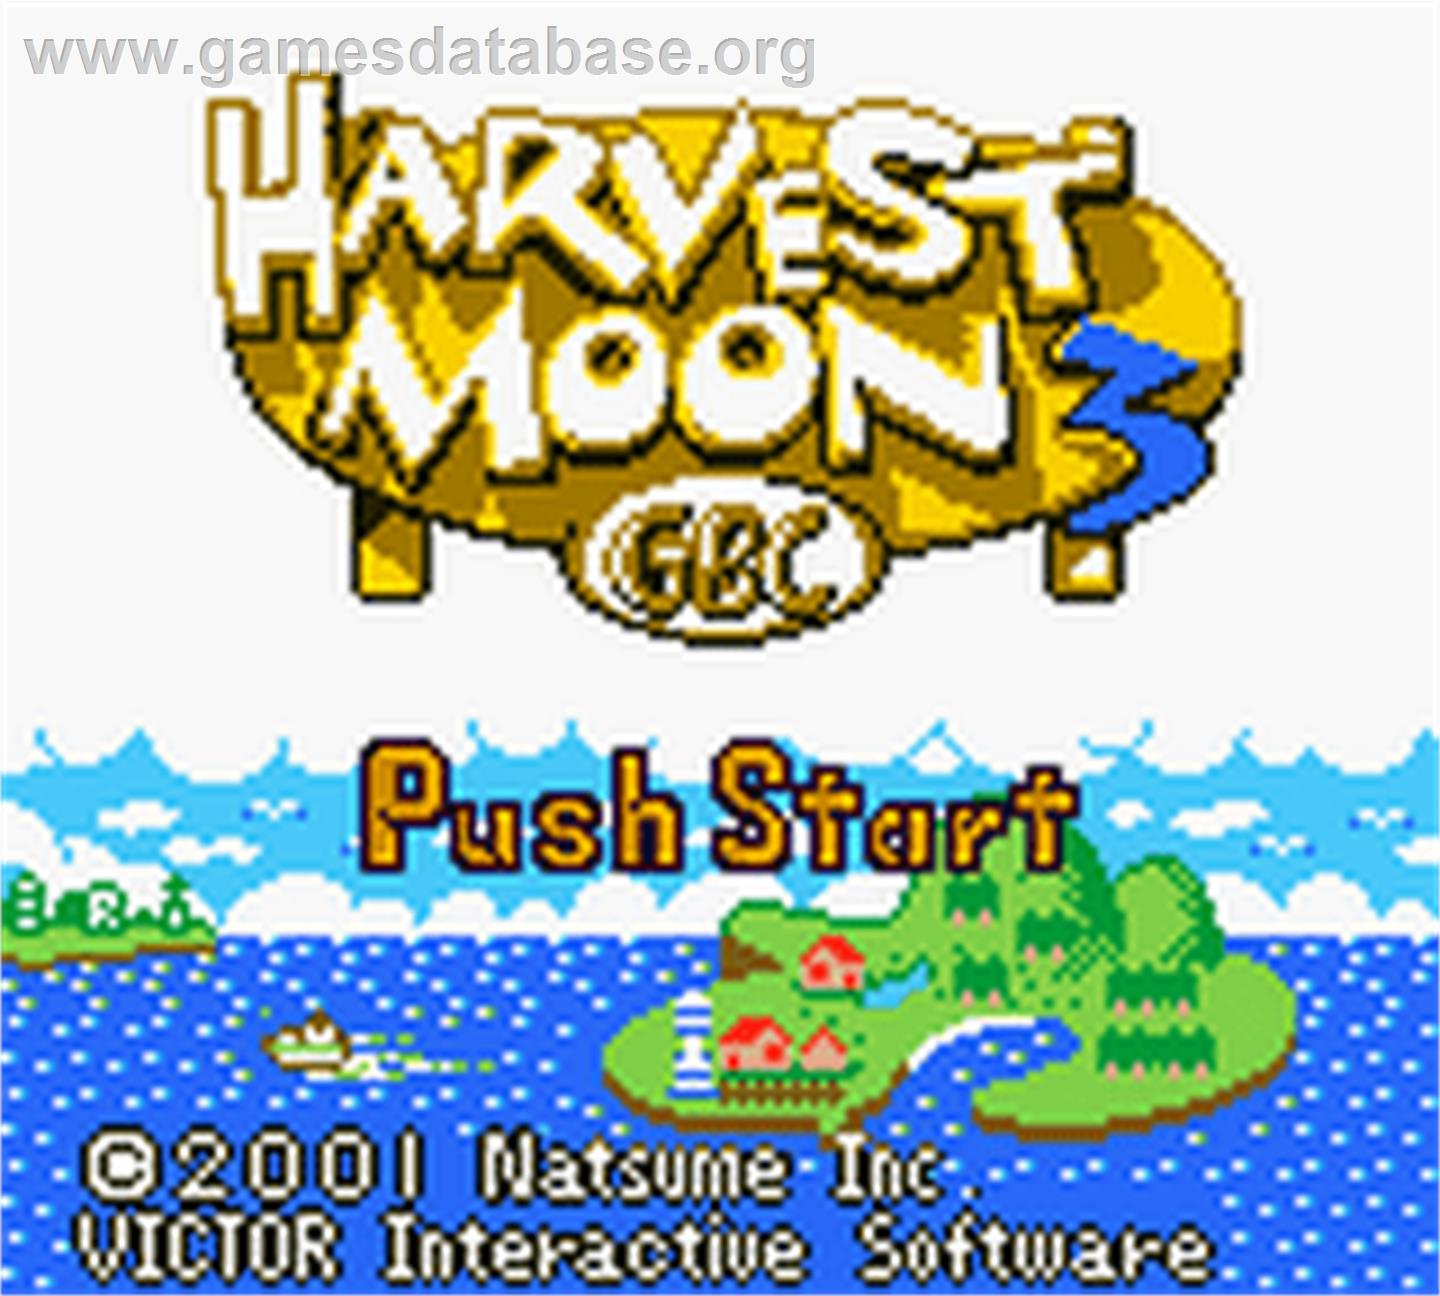 Harvest Moon 3 GBC - Nintendo Game Boy Color - Artwork - Title Screen